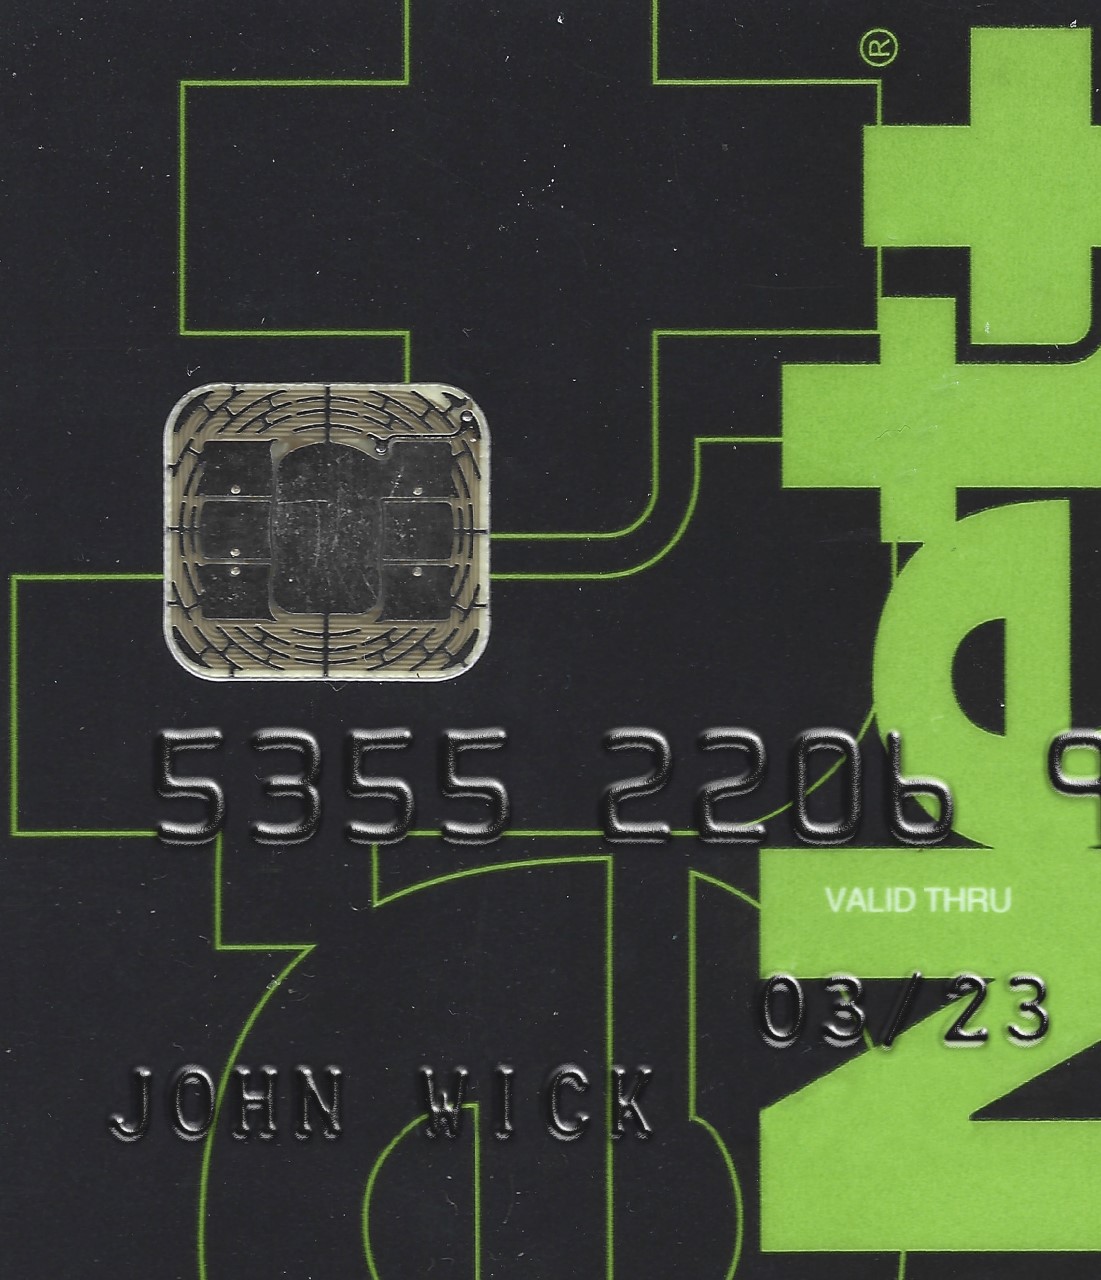  Credit Card-2